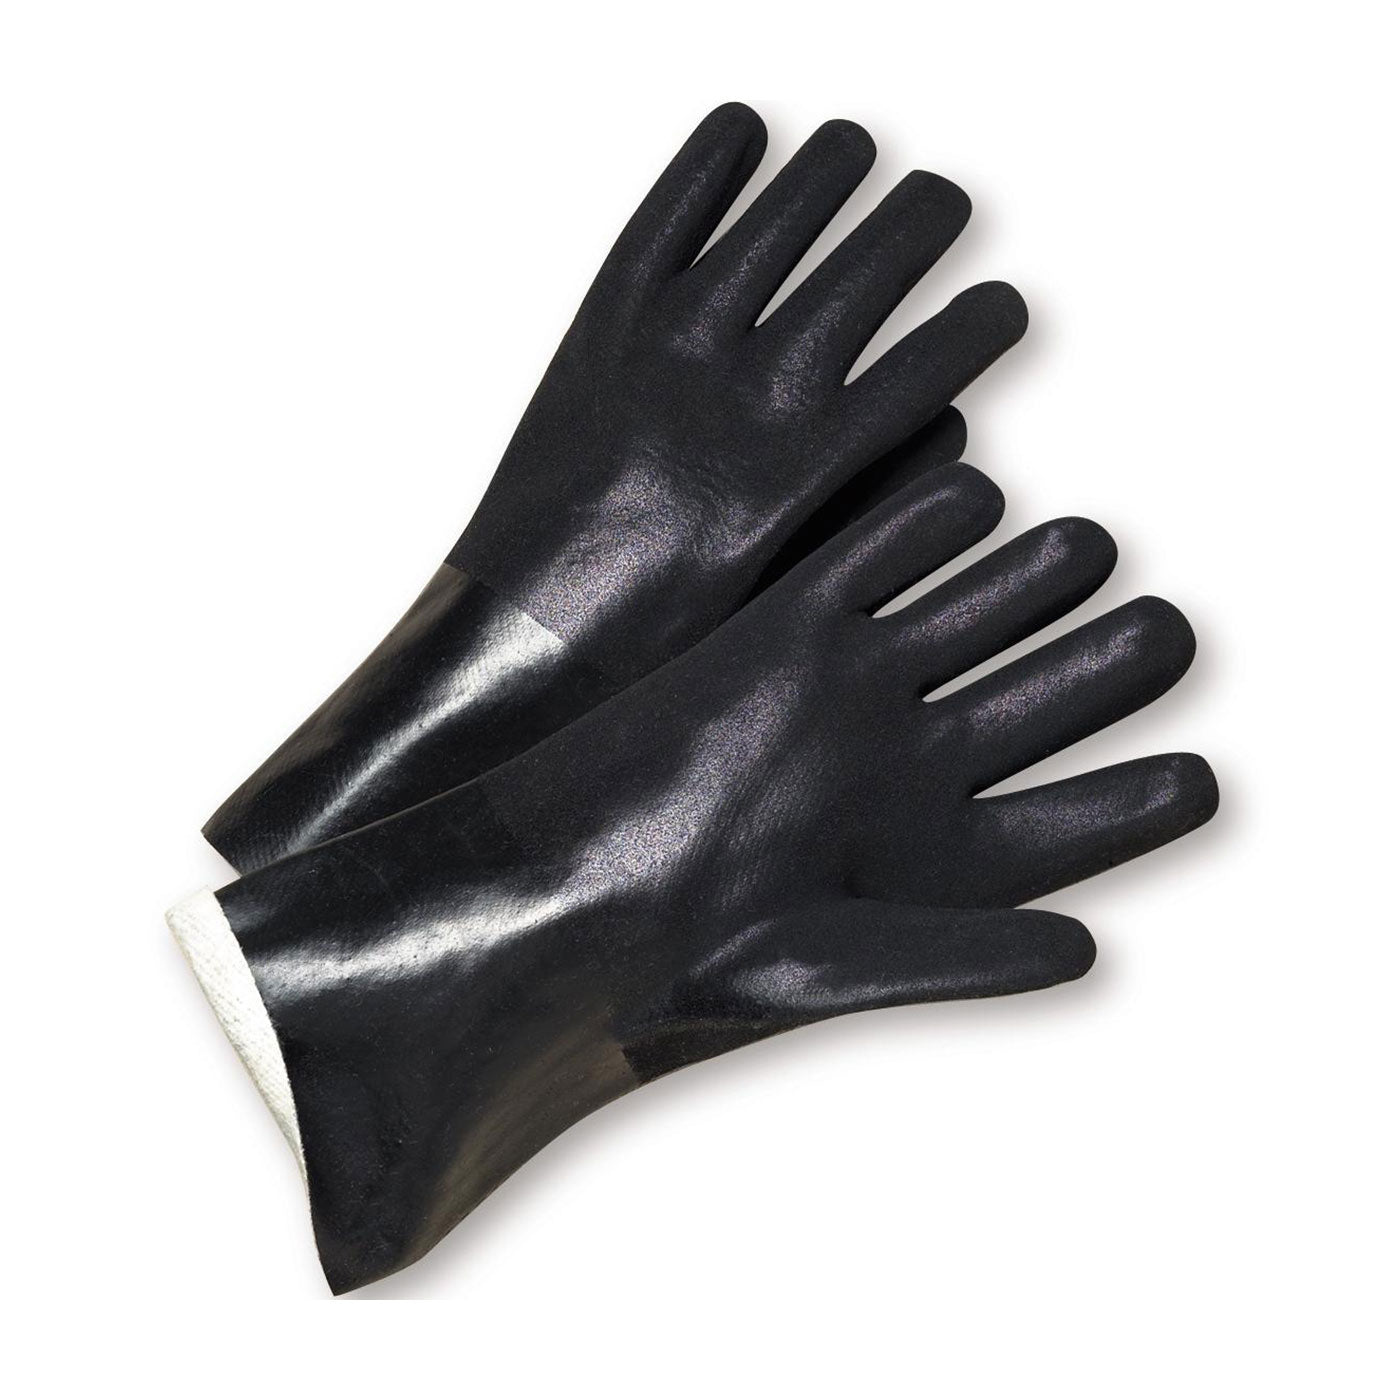 Pip 12 Rough Pvc Glove Black